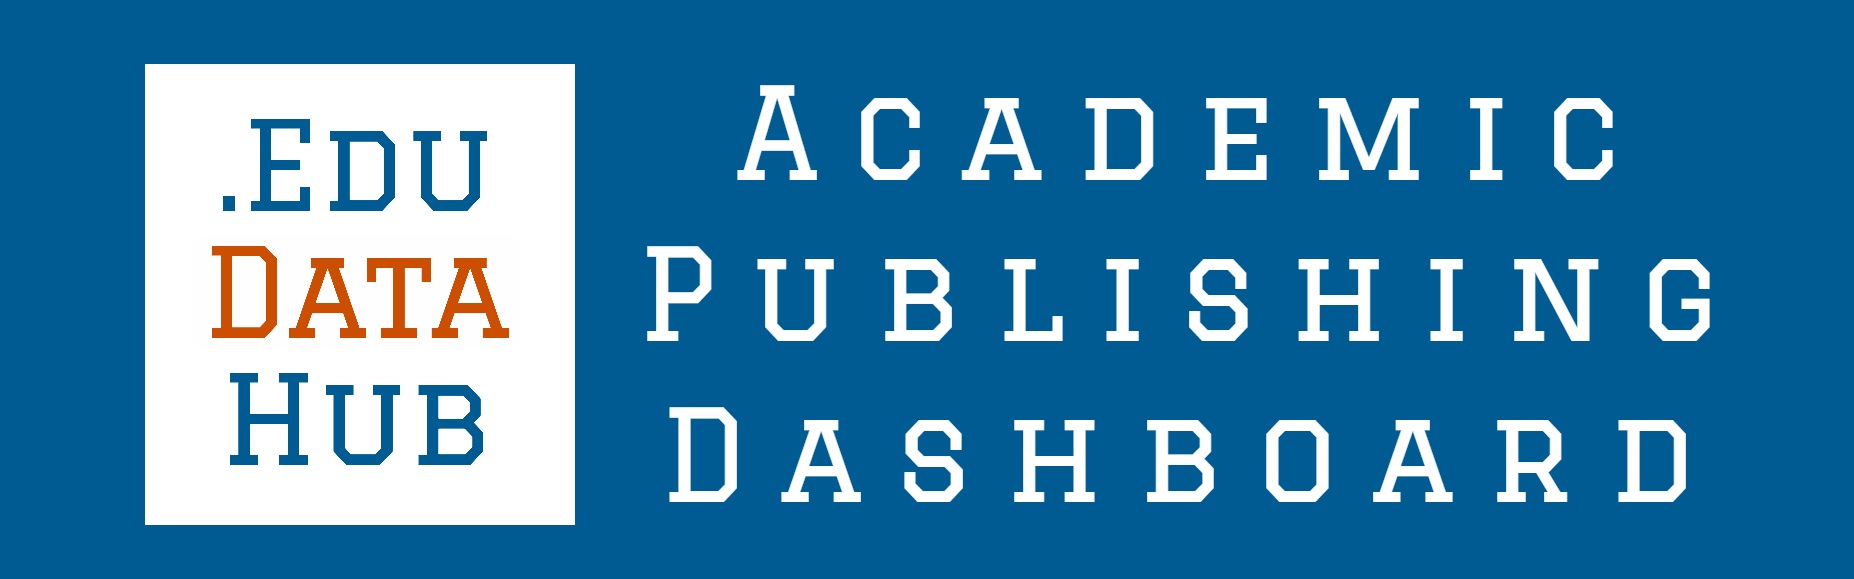 EduDataHub Academic Publishing Dashboard